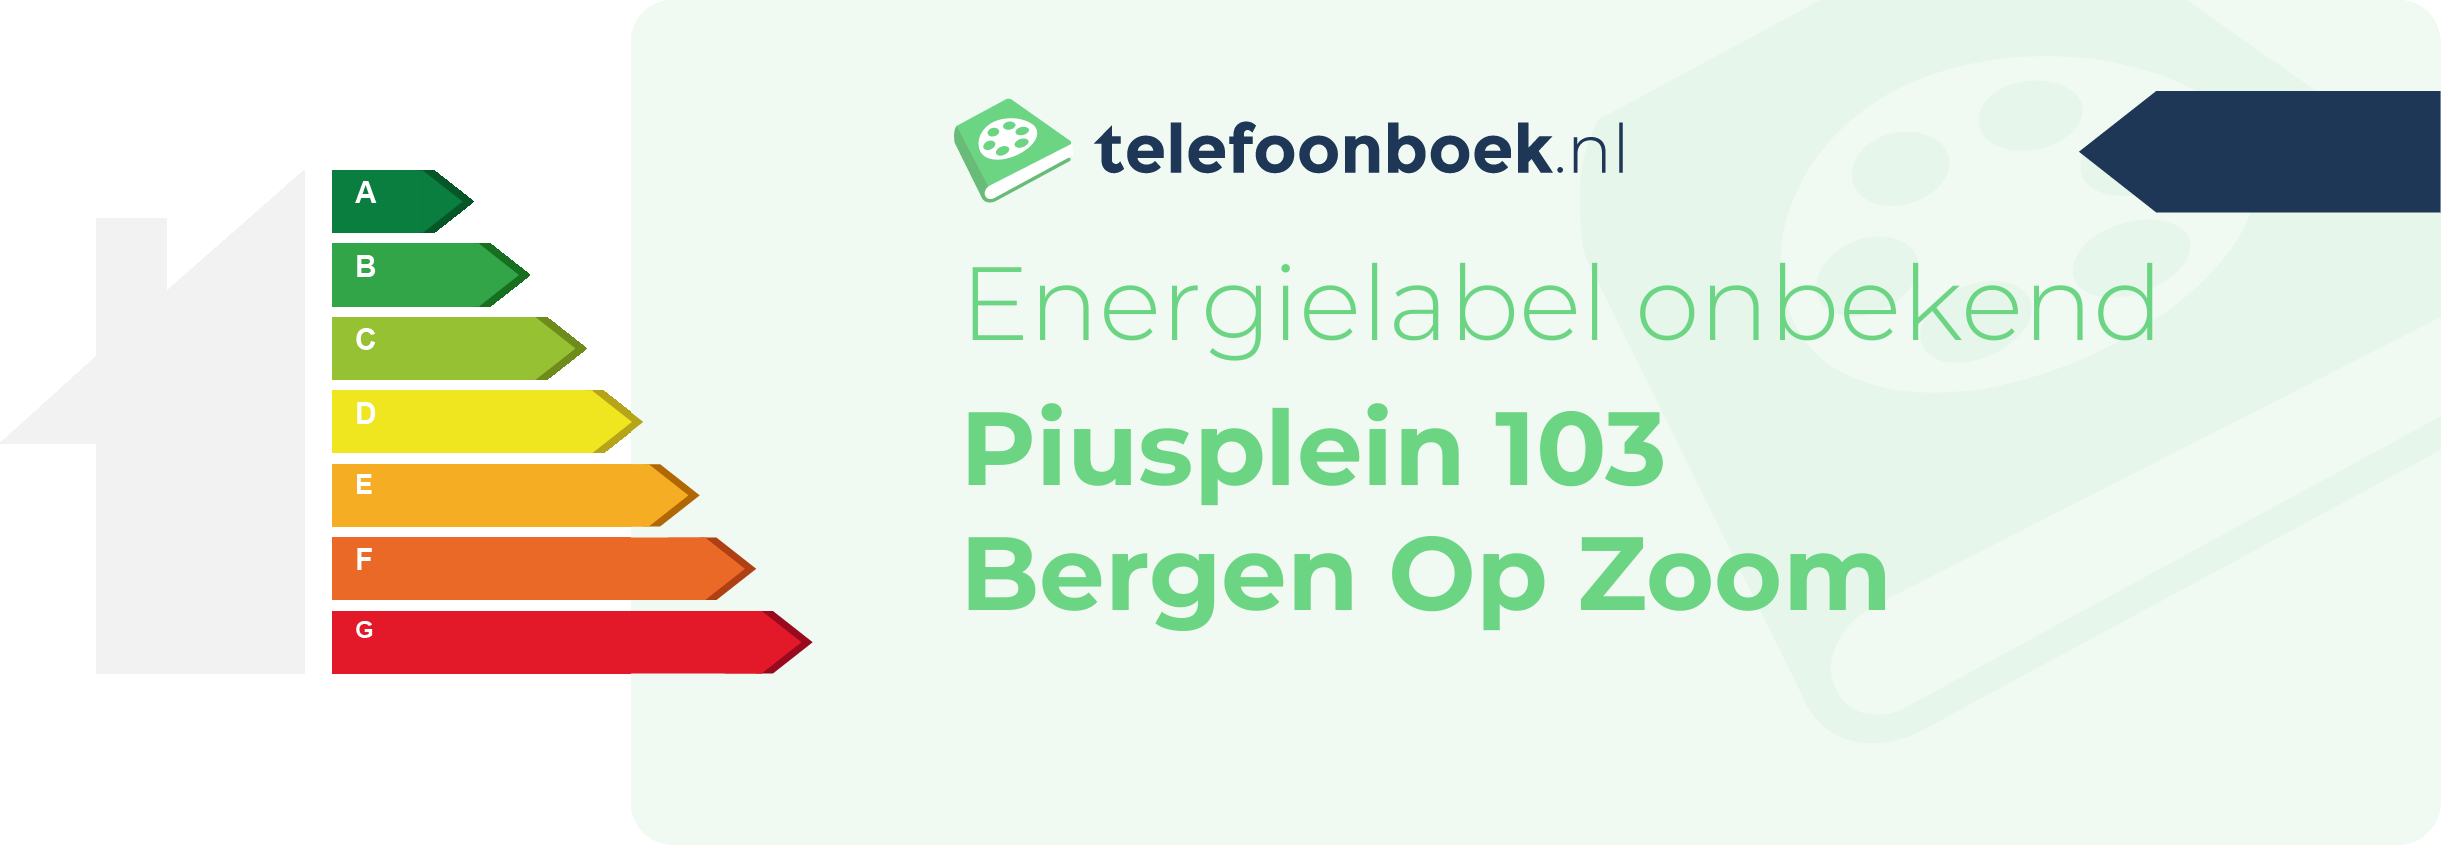 Energielabel Piusplein 103 Bergen Op Zoom